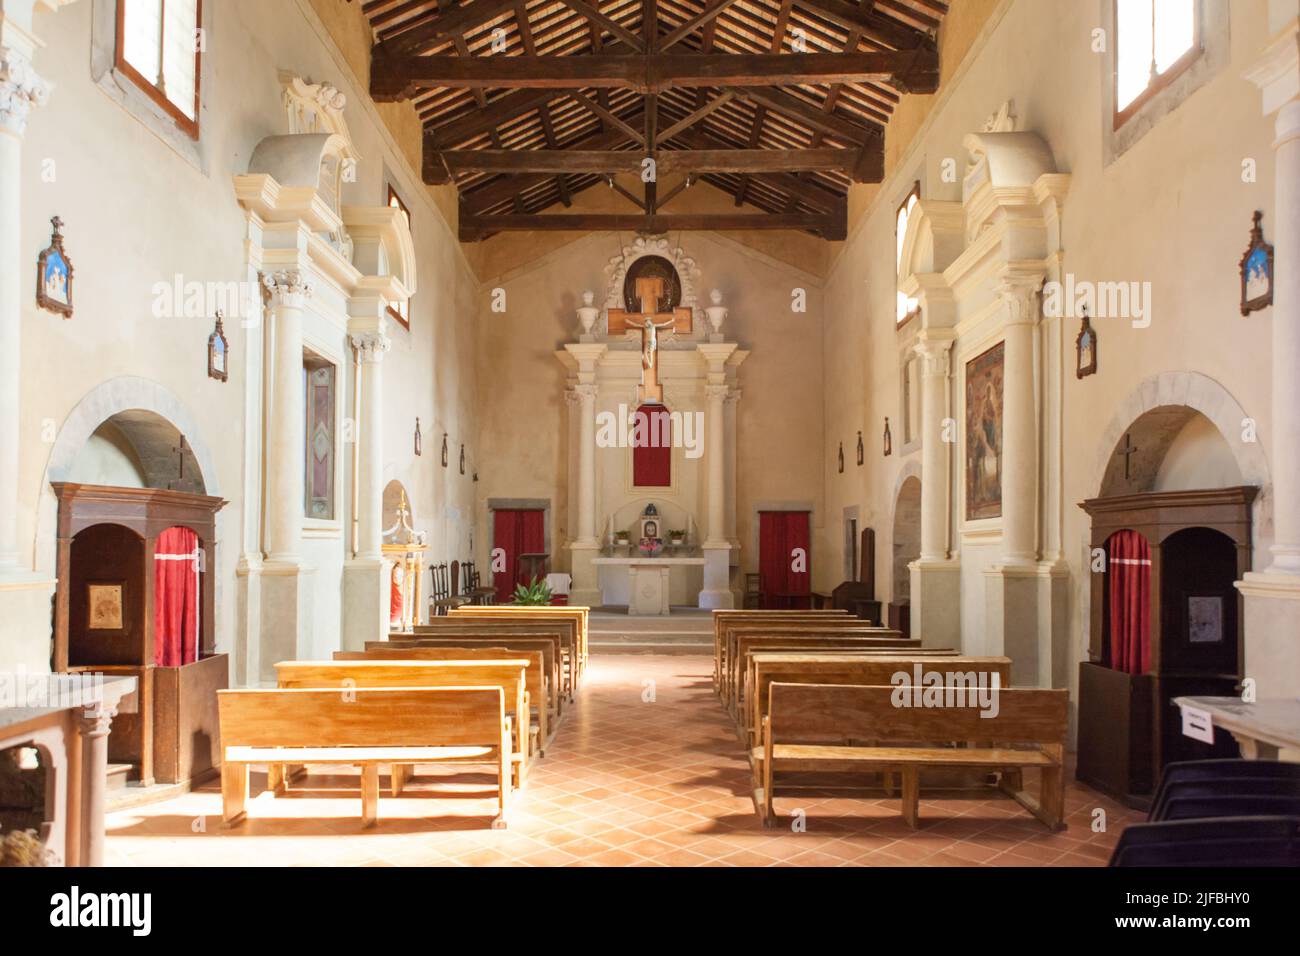 Abbazia benedettina (abbaye bénédictine), San Benedetto à Alpe, Italie Banque D'Images